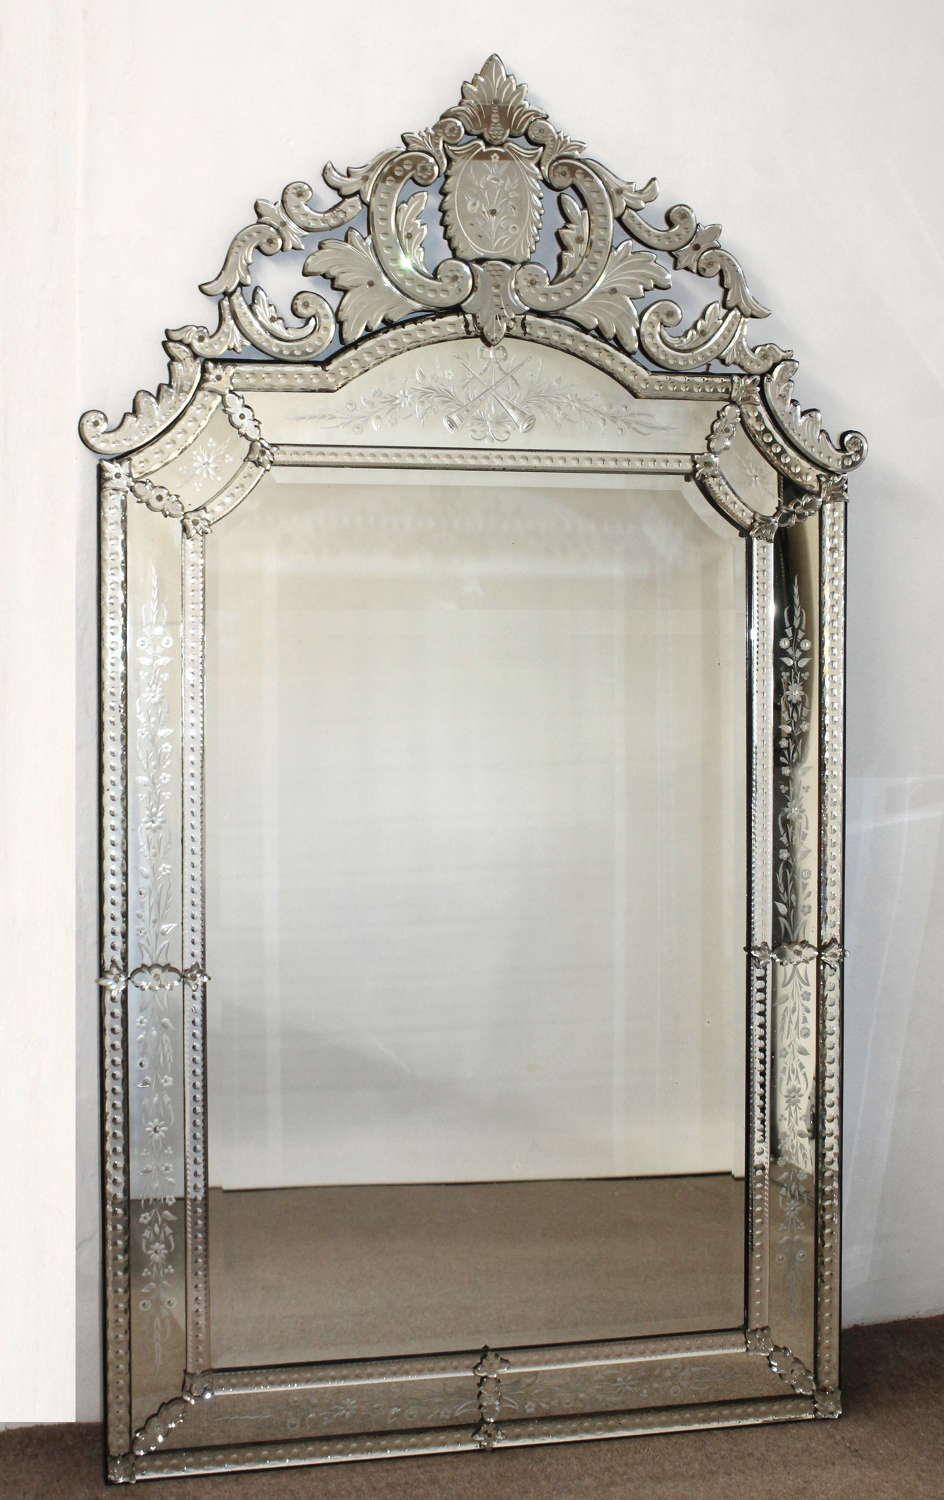 Magnificent large decorative antique Venetian mirror